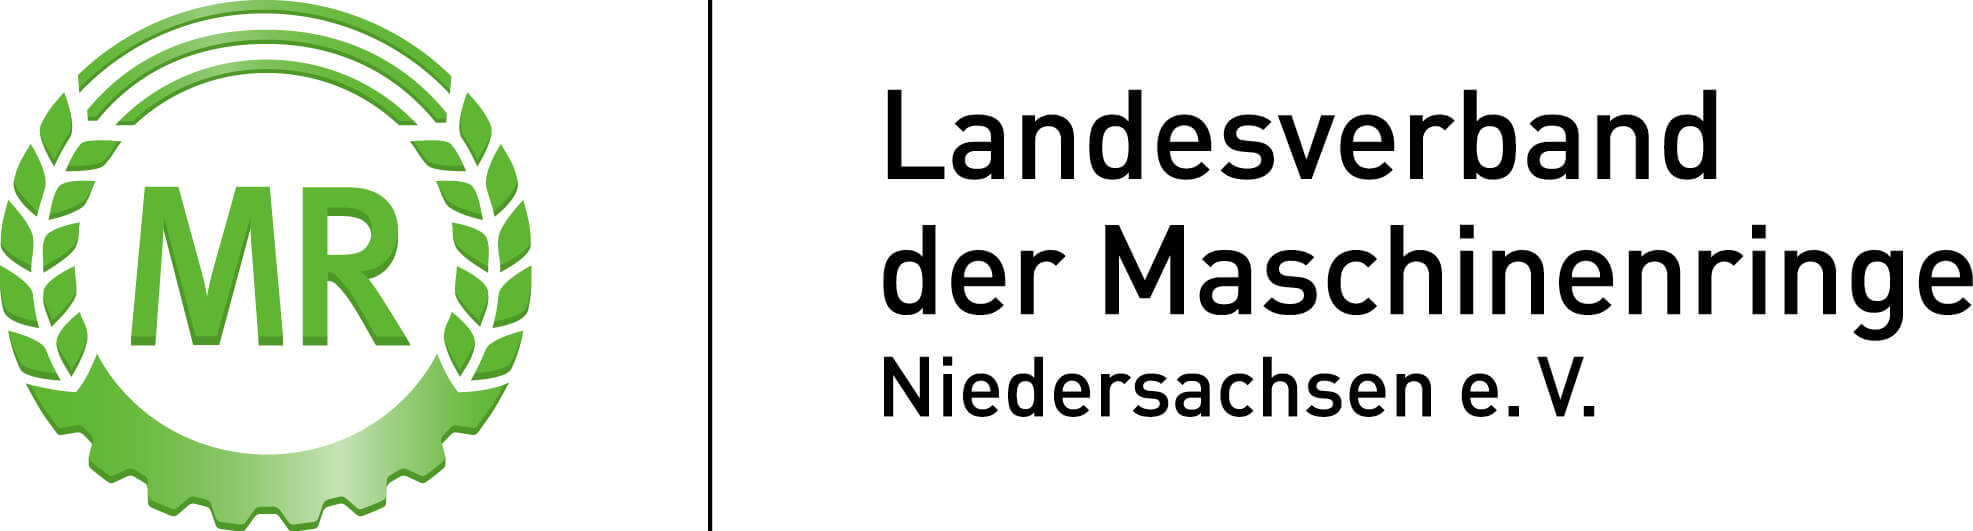 Logo Landesverband der Maschinenringe Niedersachsen e.V.